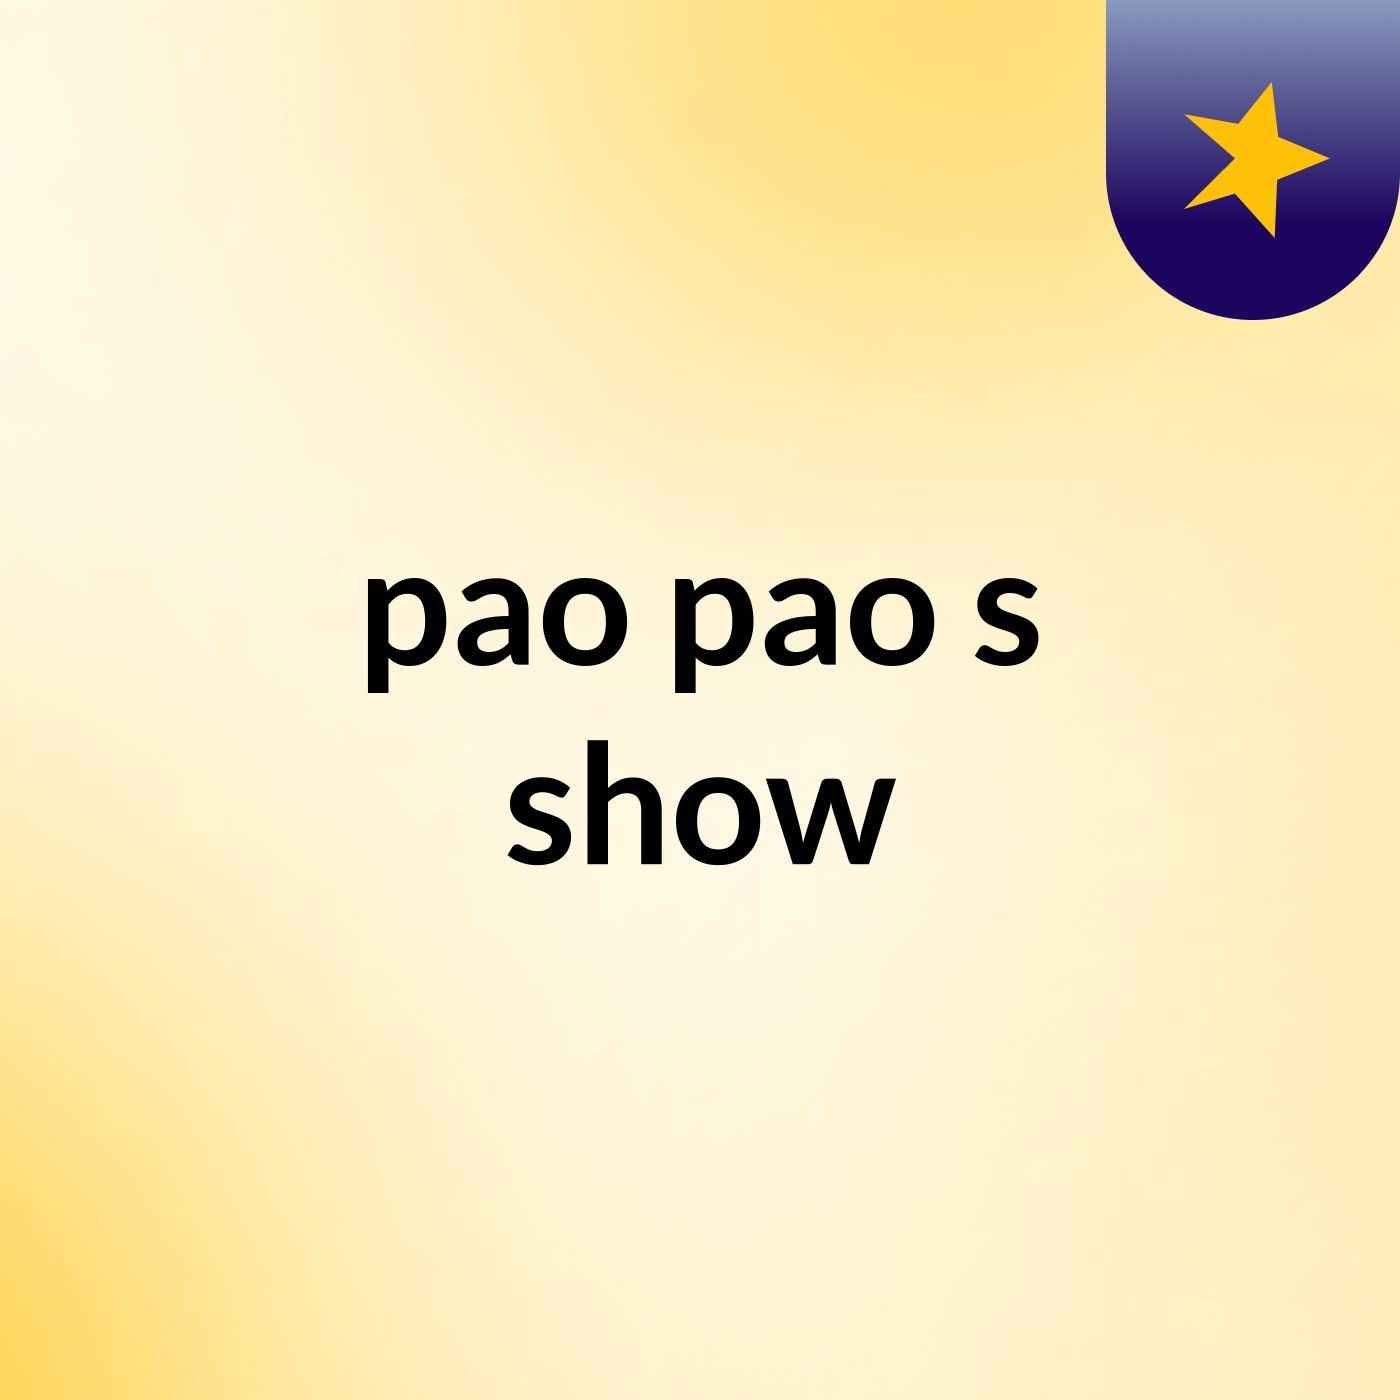 pao pao's show